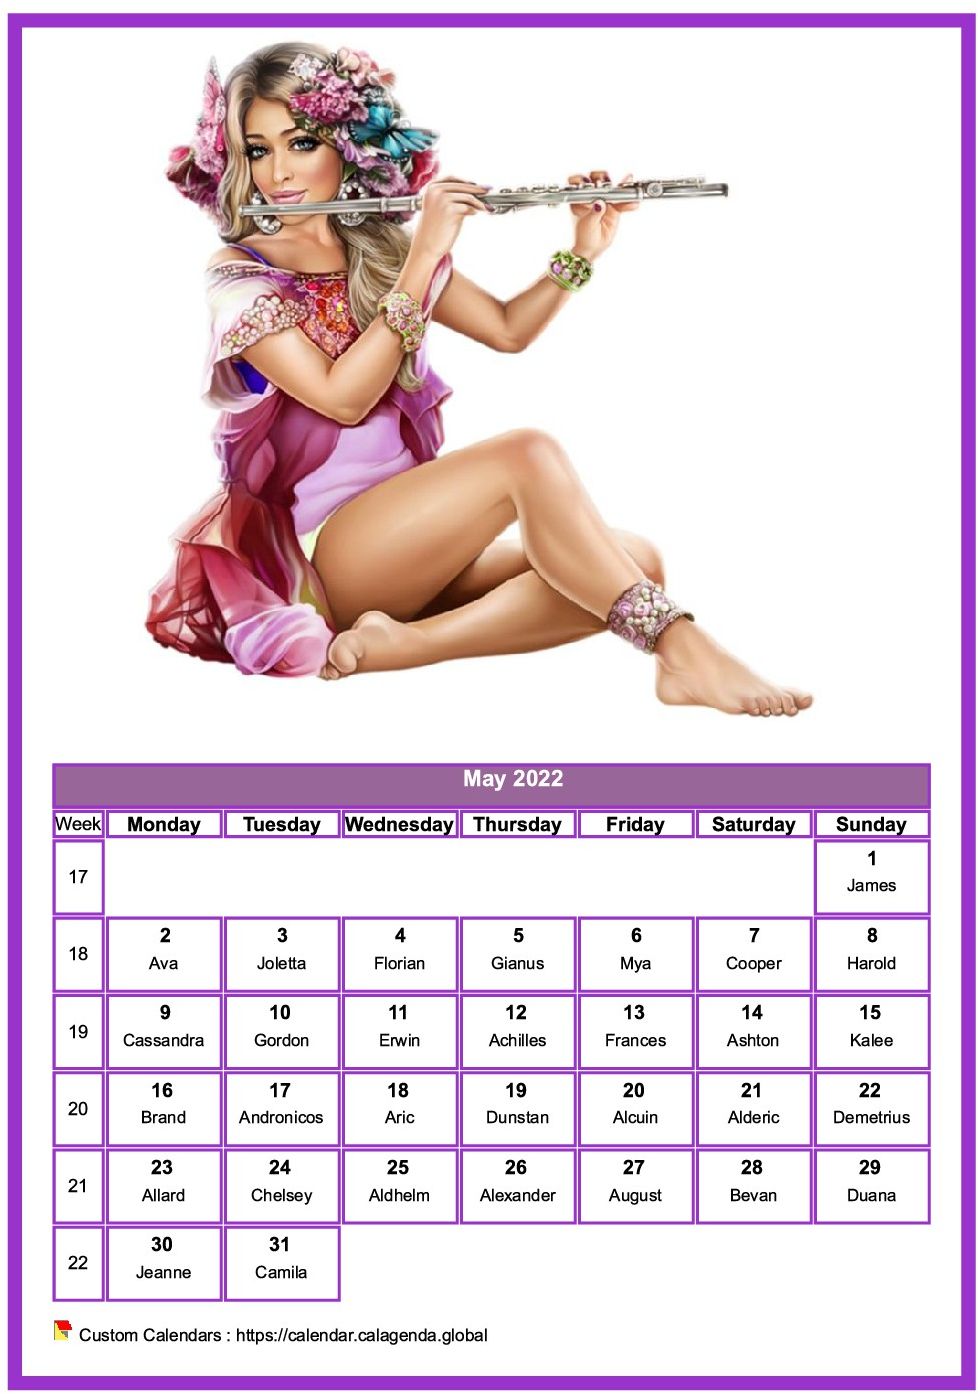 Calendar May 2022 women